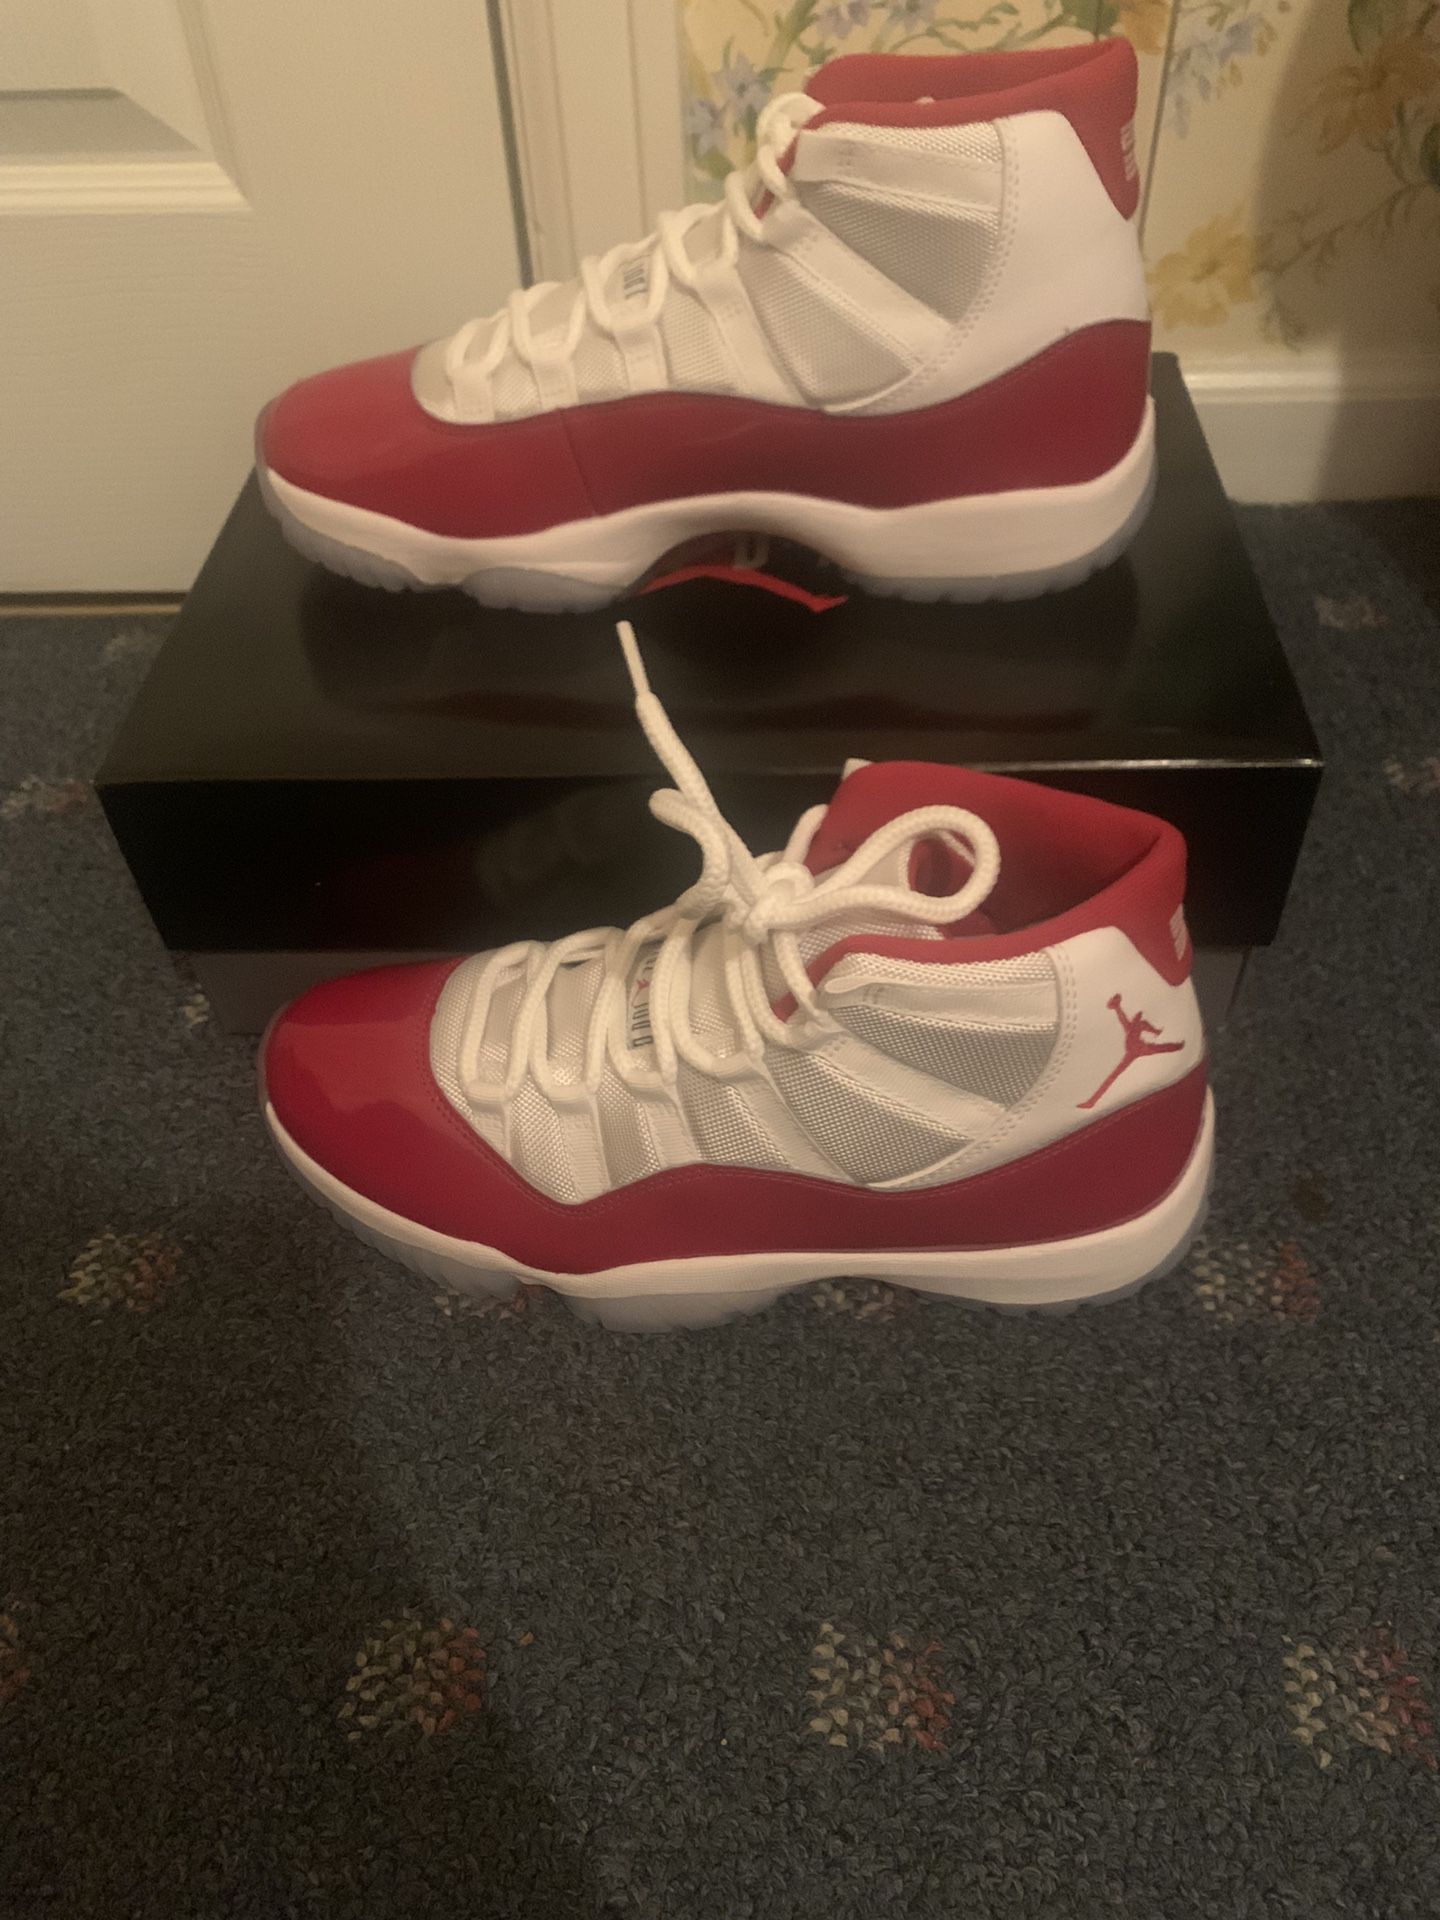 Jordan 11 Retro Cherry Red